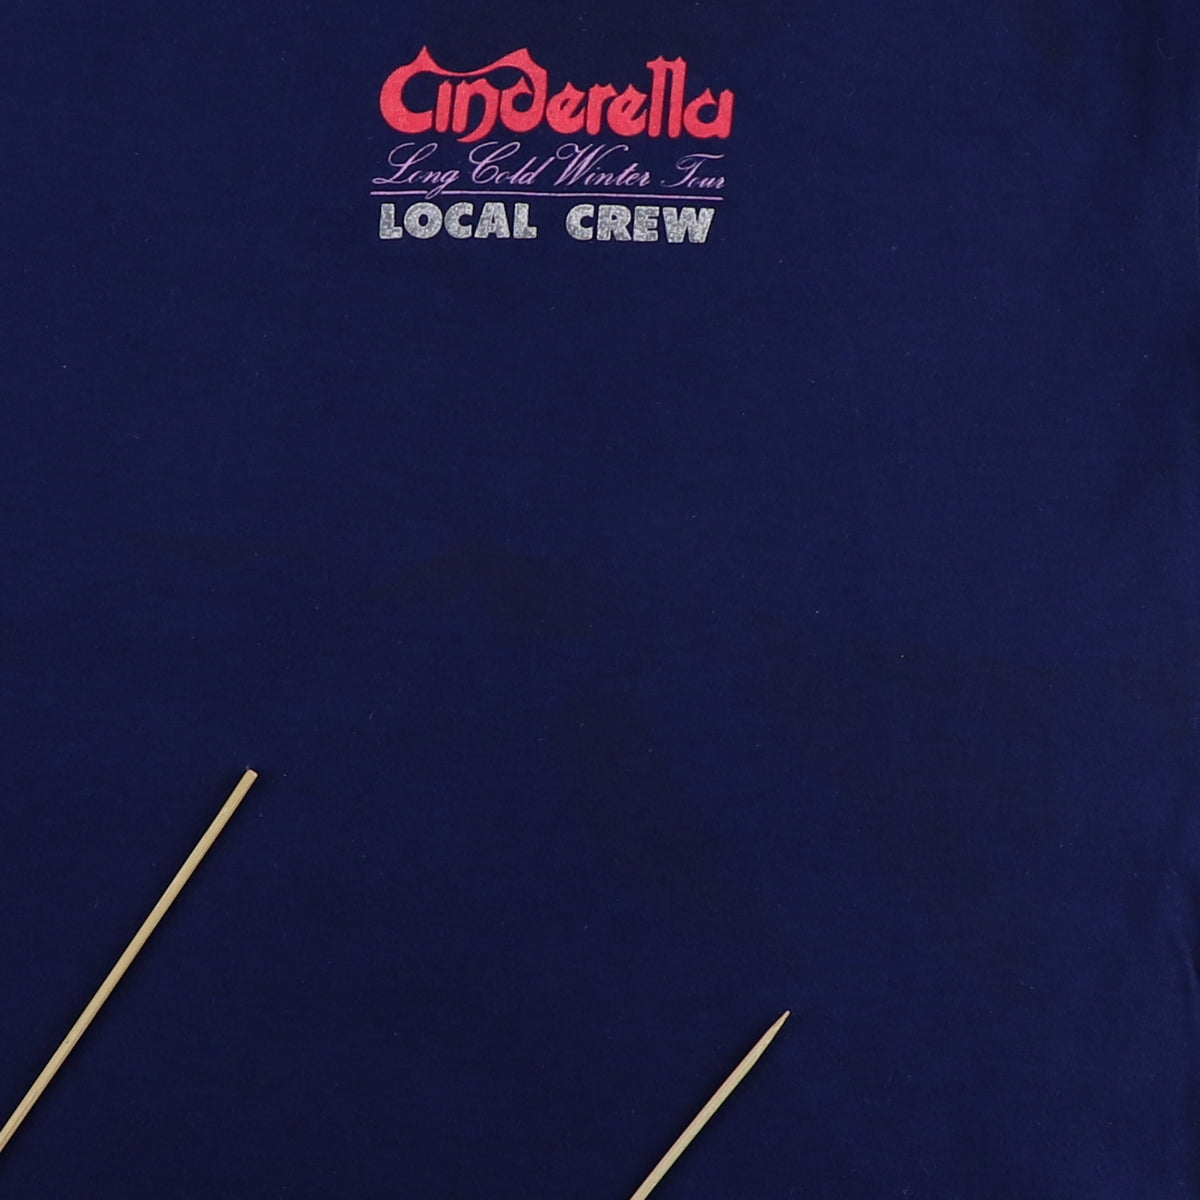 1989 Cinderella Long Cold Winter Local Crew Tour Shirt